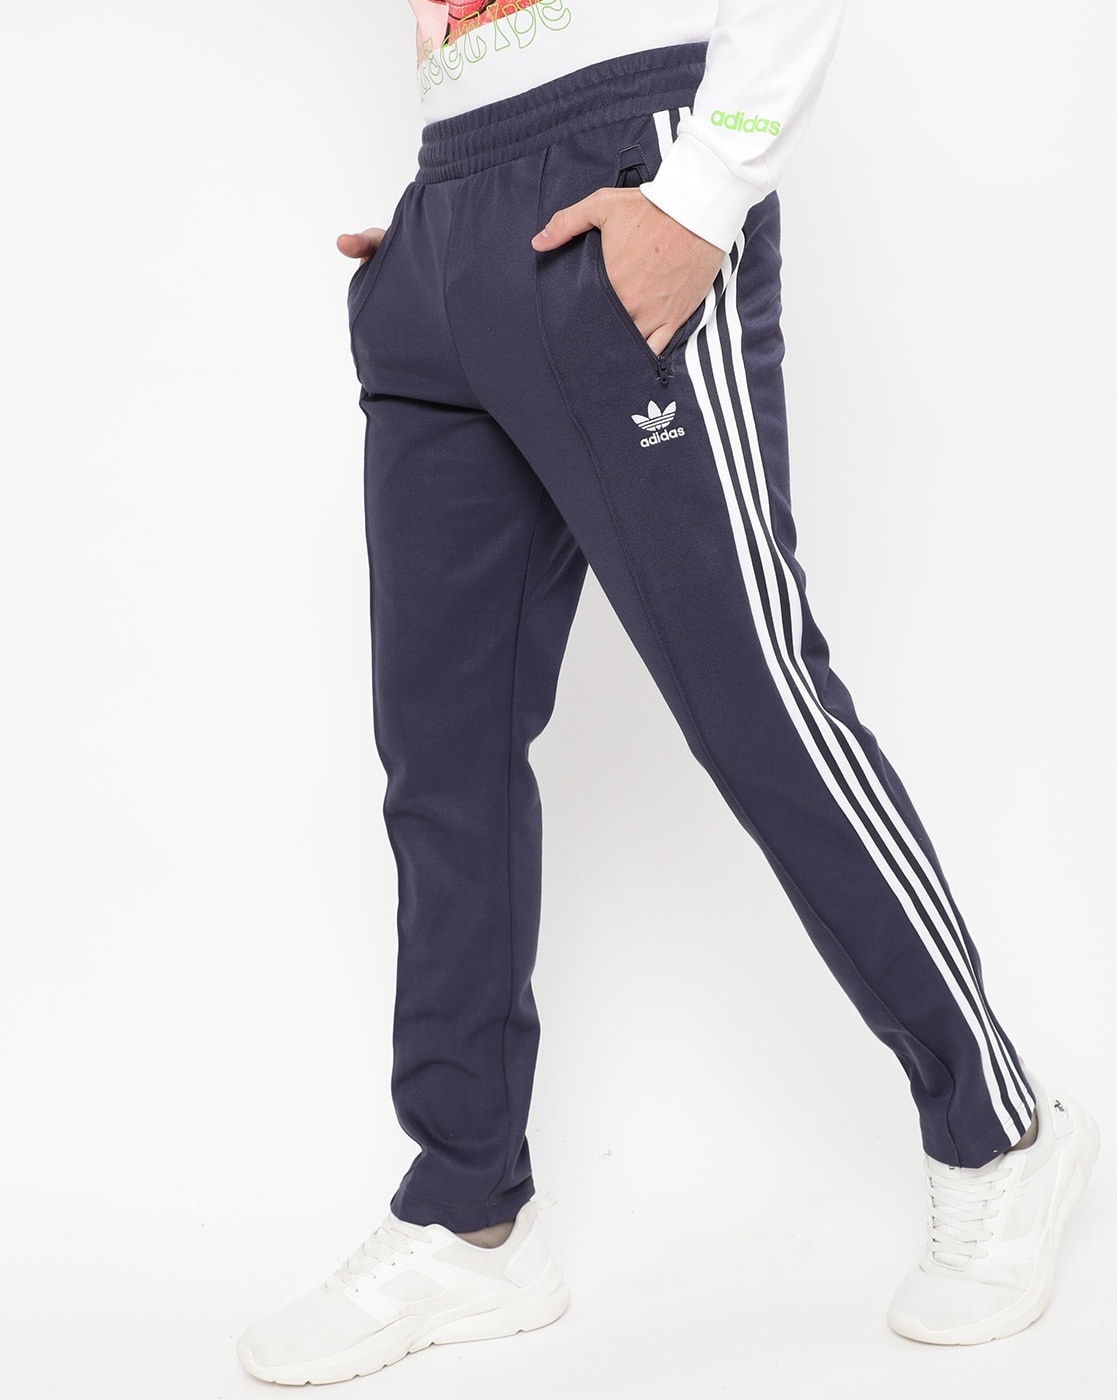 Adidas Originals Pants & Leggings for Young Adult Women | Nordstrom